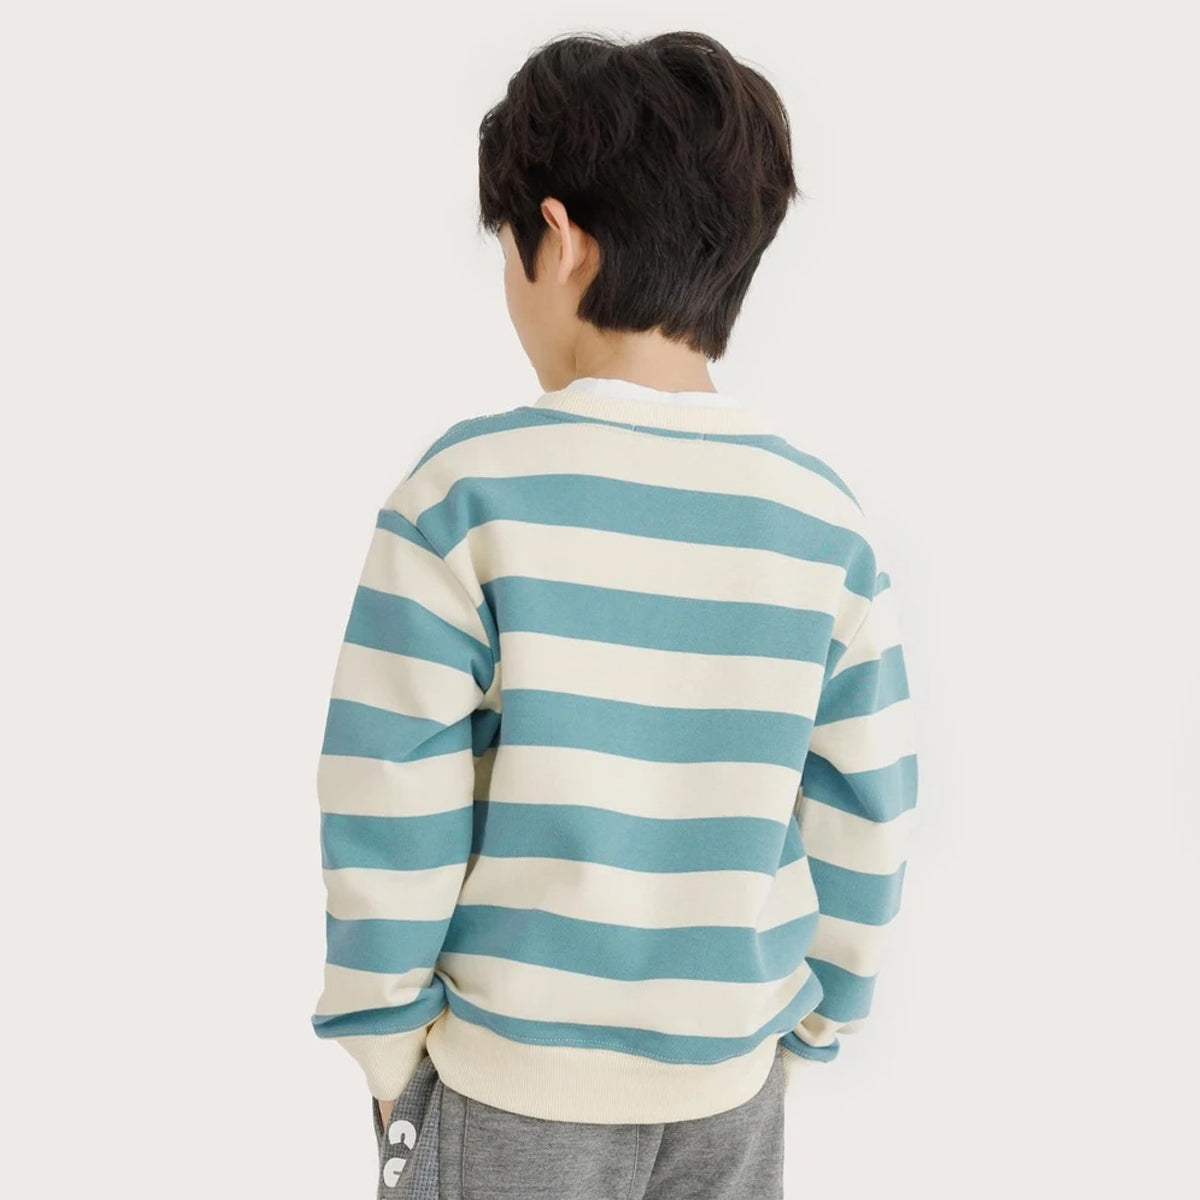 VENUTALOZA Boy's Plus Color Block & Round Neck Stripe (Combo Pack of 2) T-shirt For Boys & Girls..